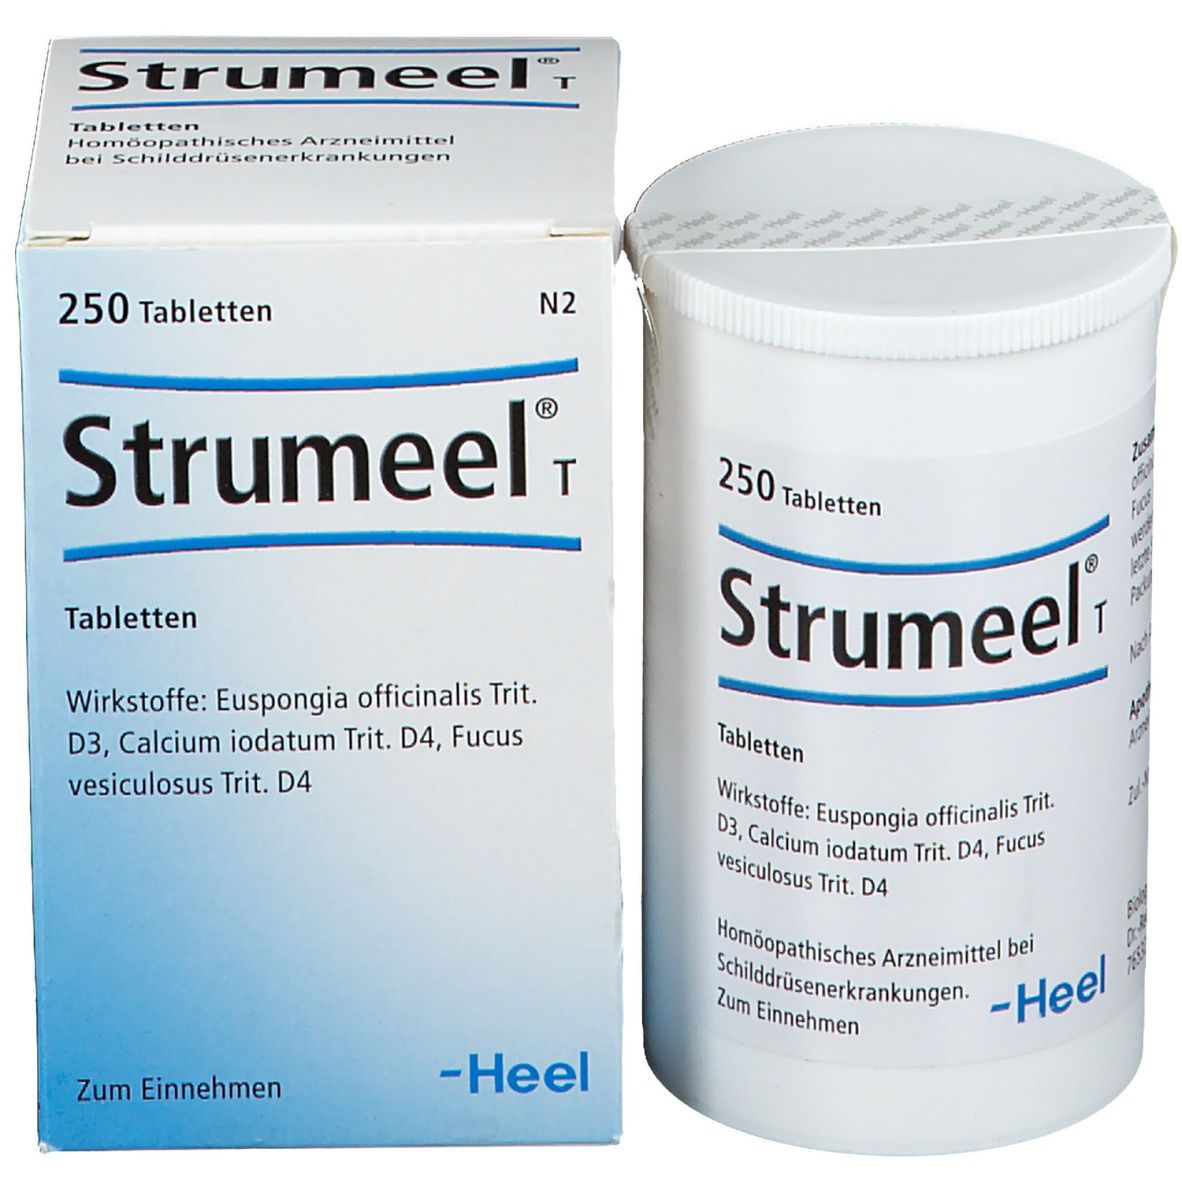 Strumeel® T Tabletten